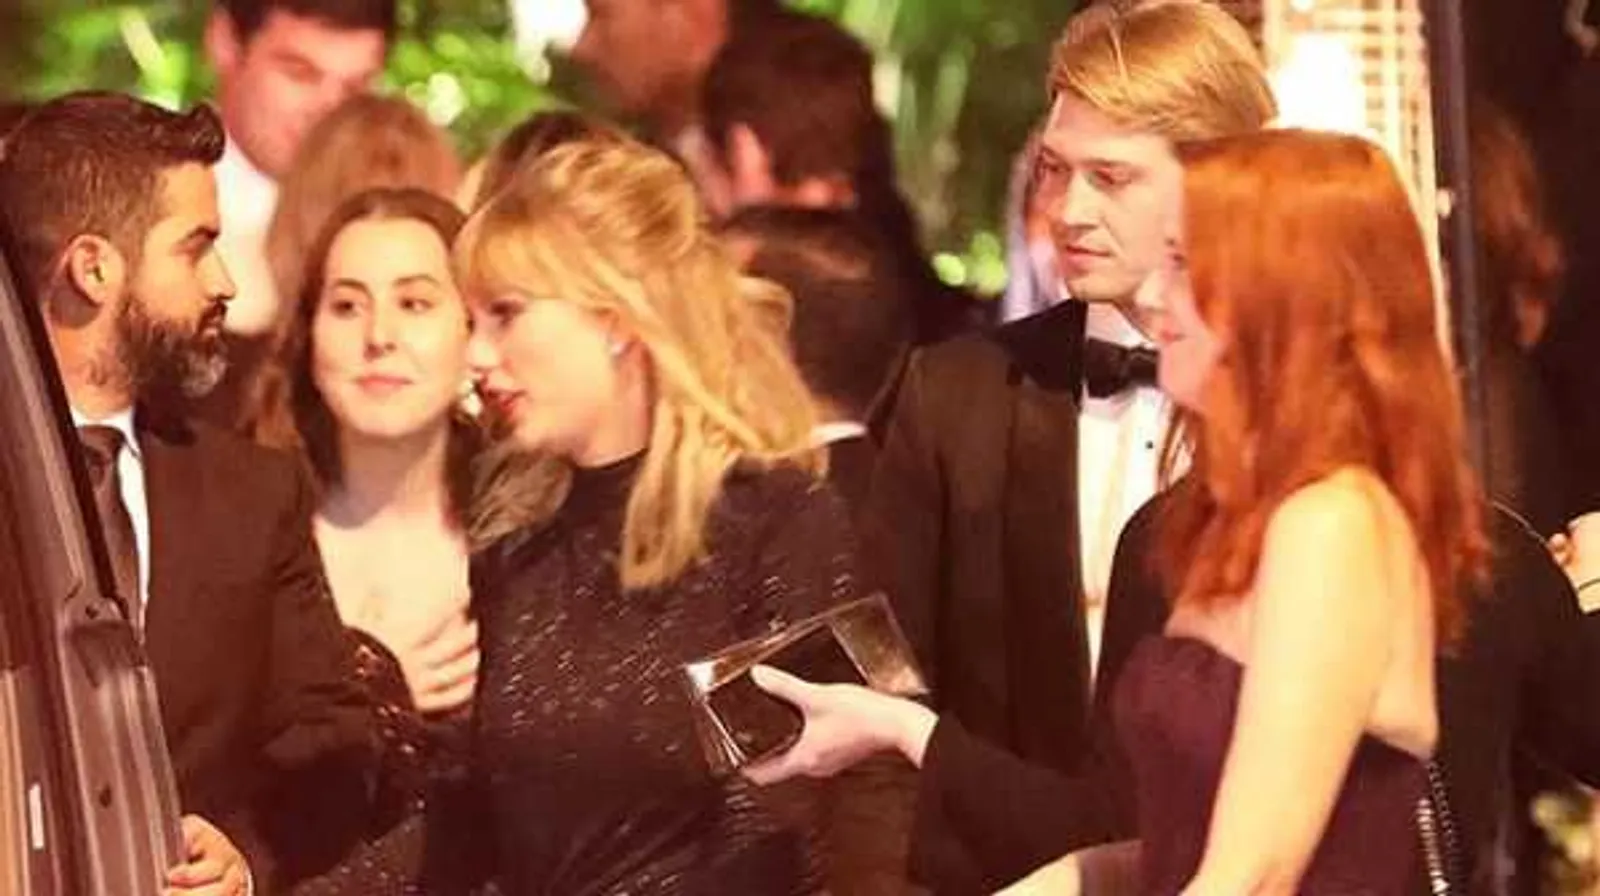 Intip Momen Mesra Taylor Swift dan Joe Alwyn di Golden Globes 2020